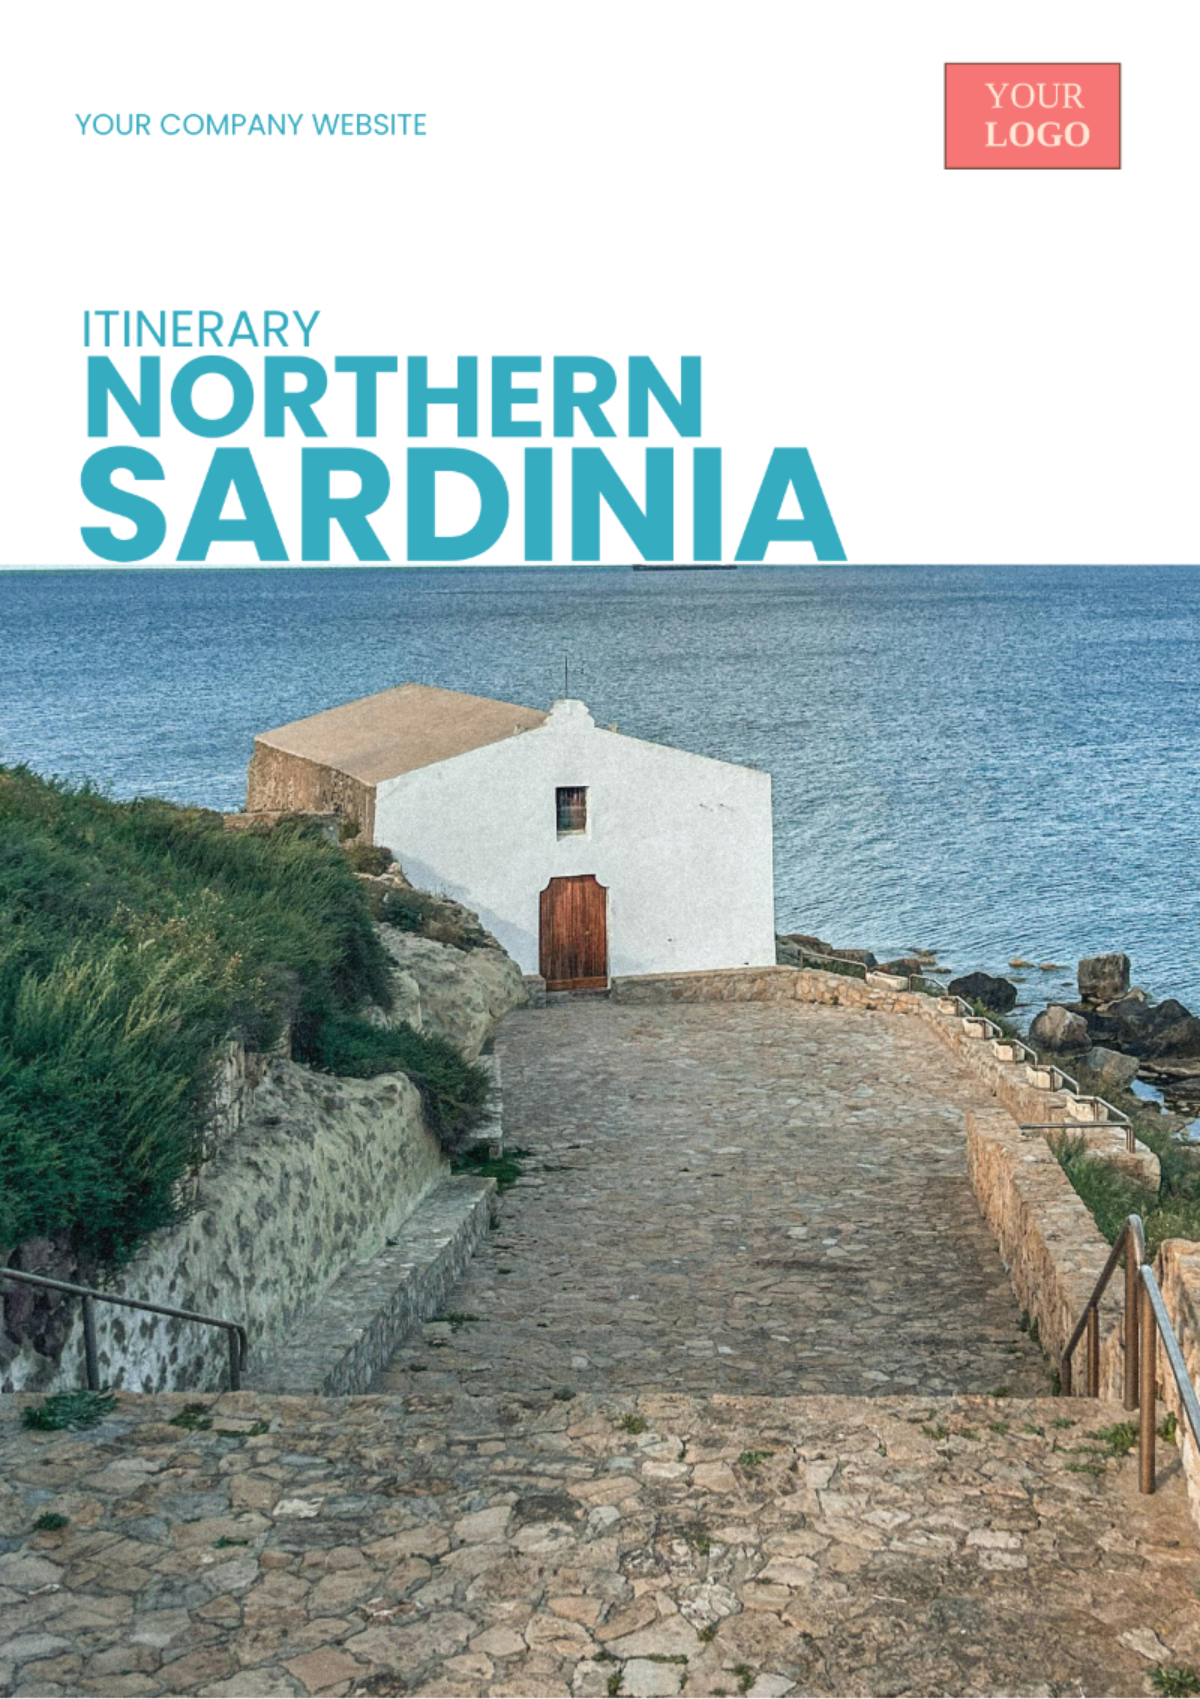 Free Northern Sardinia Itinerary Template